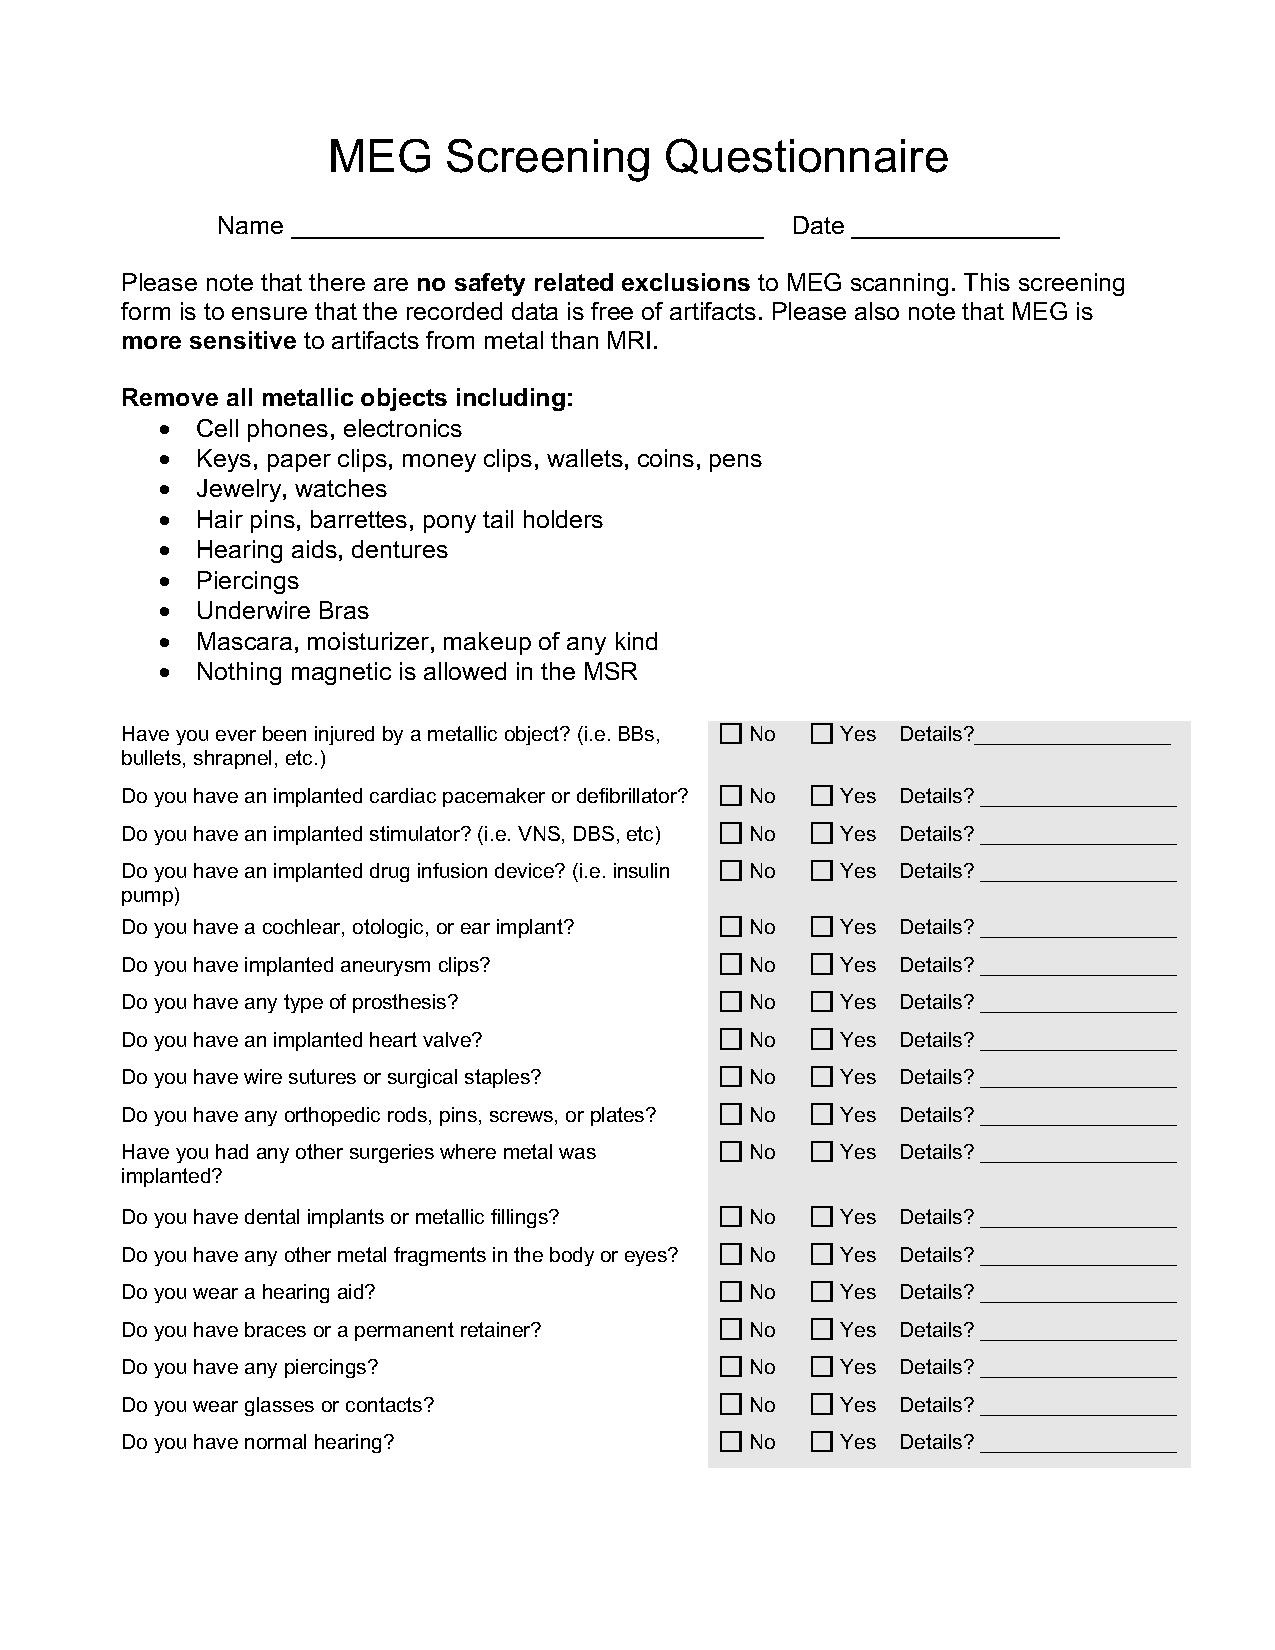 MEG Screening Questionnaire